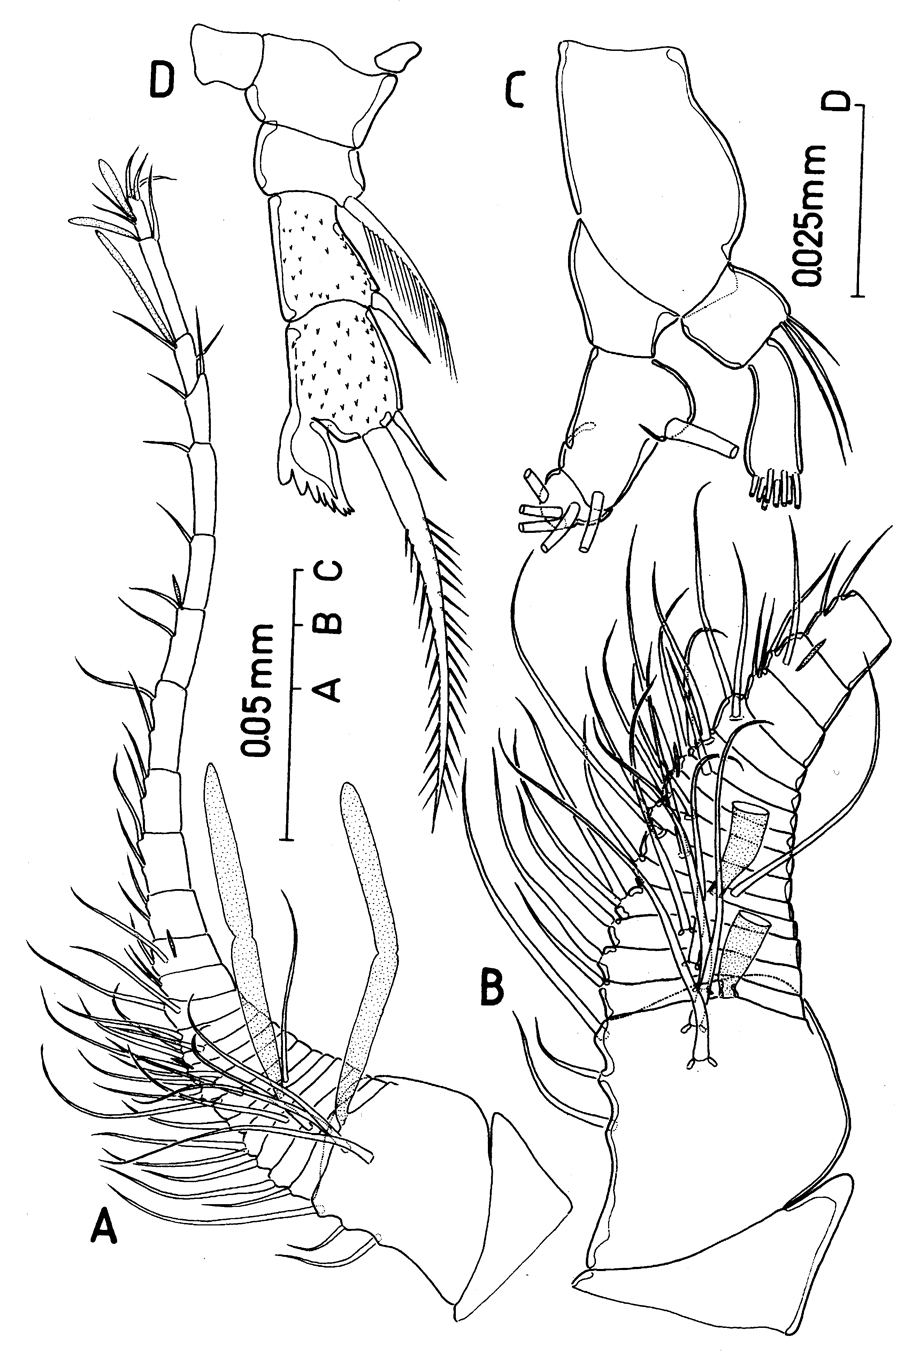 Species Protospeleophria lucayae - Plate 2 of morphological figures